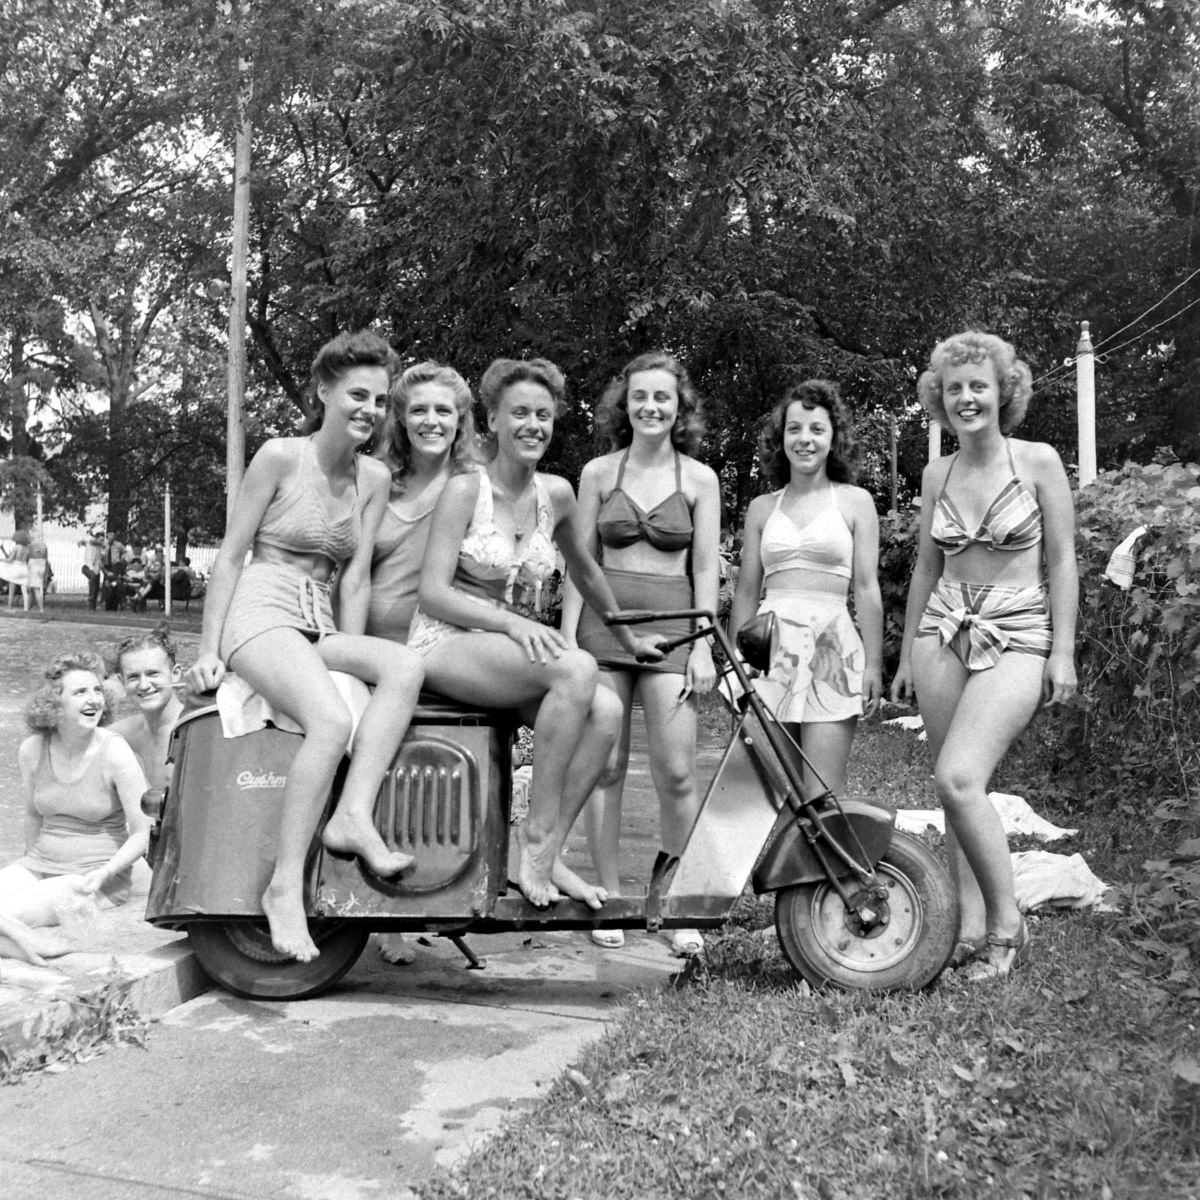 Scooter enthusiasts in Nebraska, 1945.